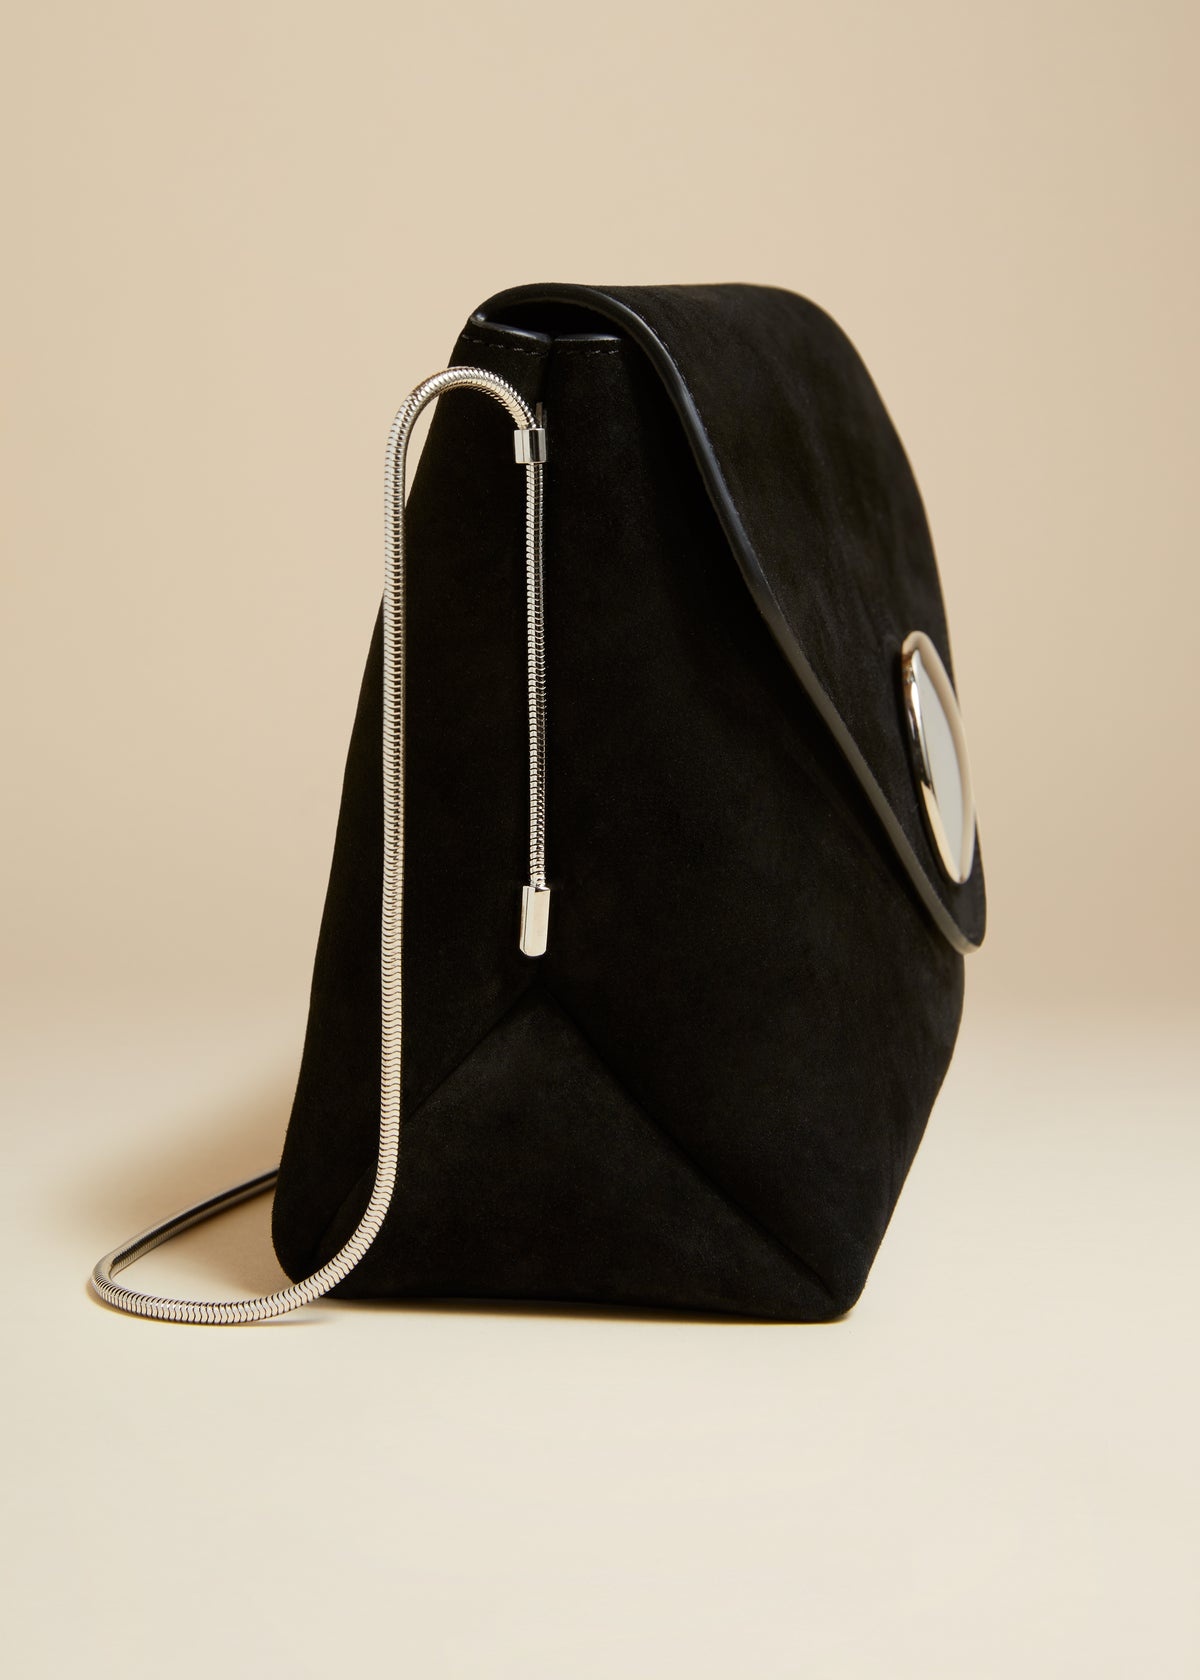 The Bobbi Bag in Black Suede - 3